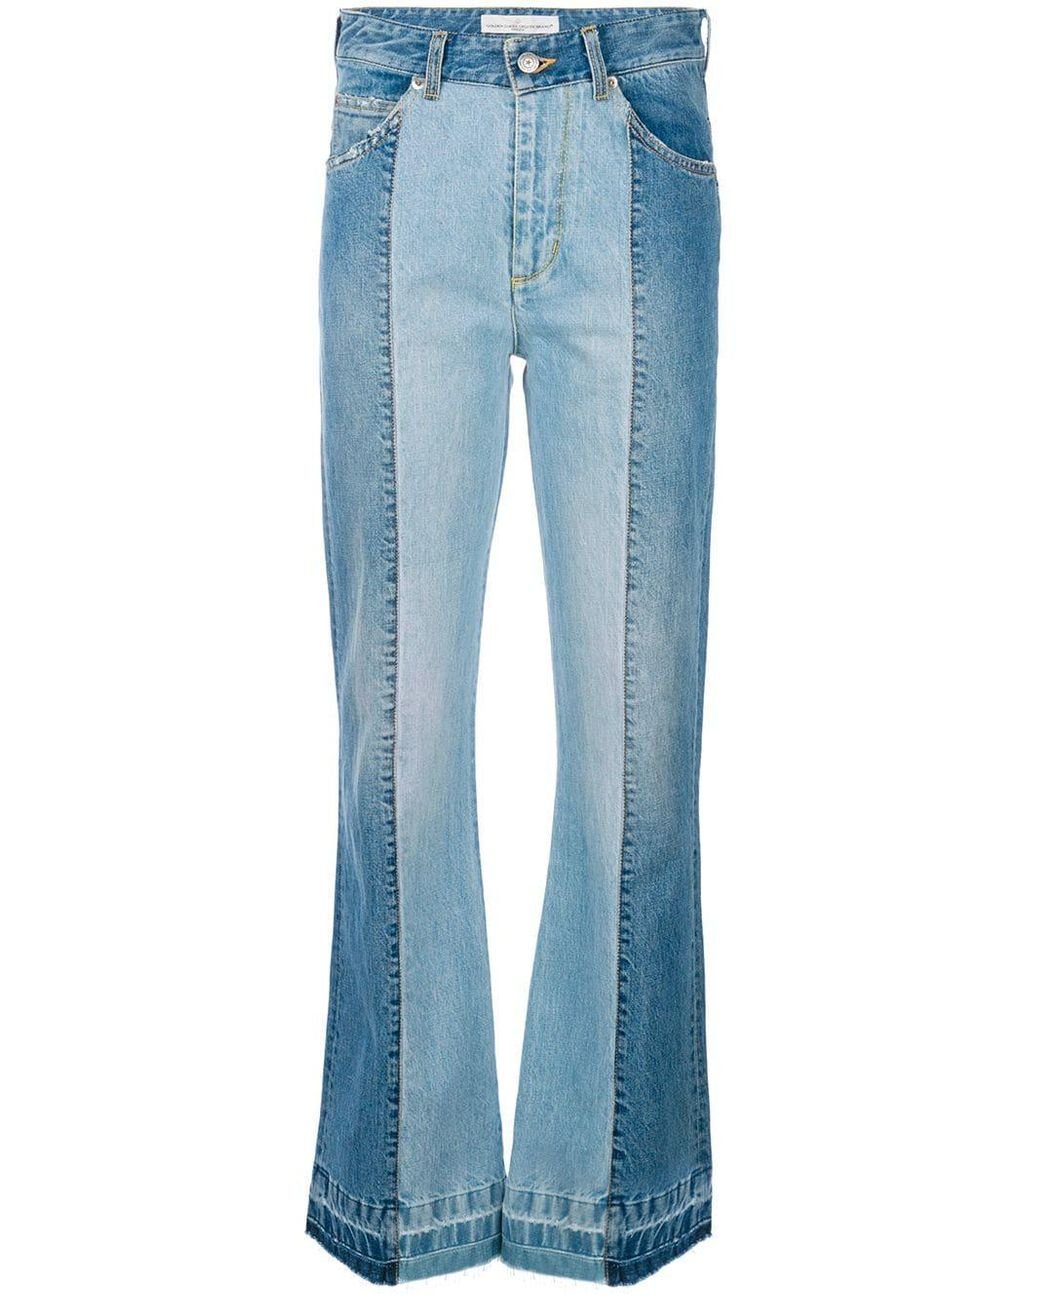 Golden Goose Deluxe Brand Denim Flared Jeans in Blue - Lyst